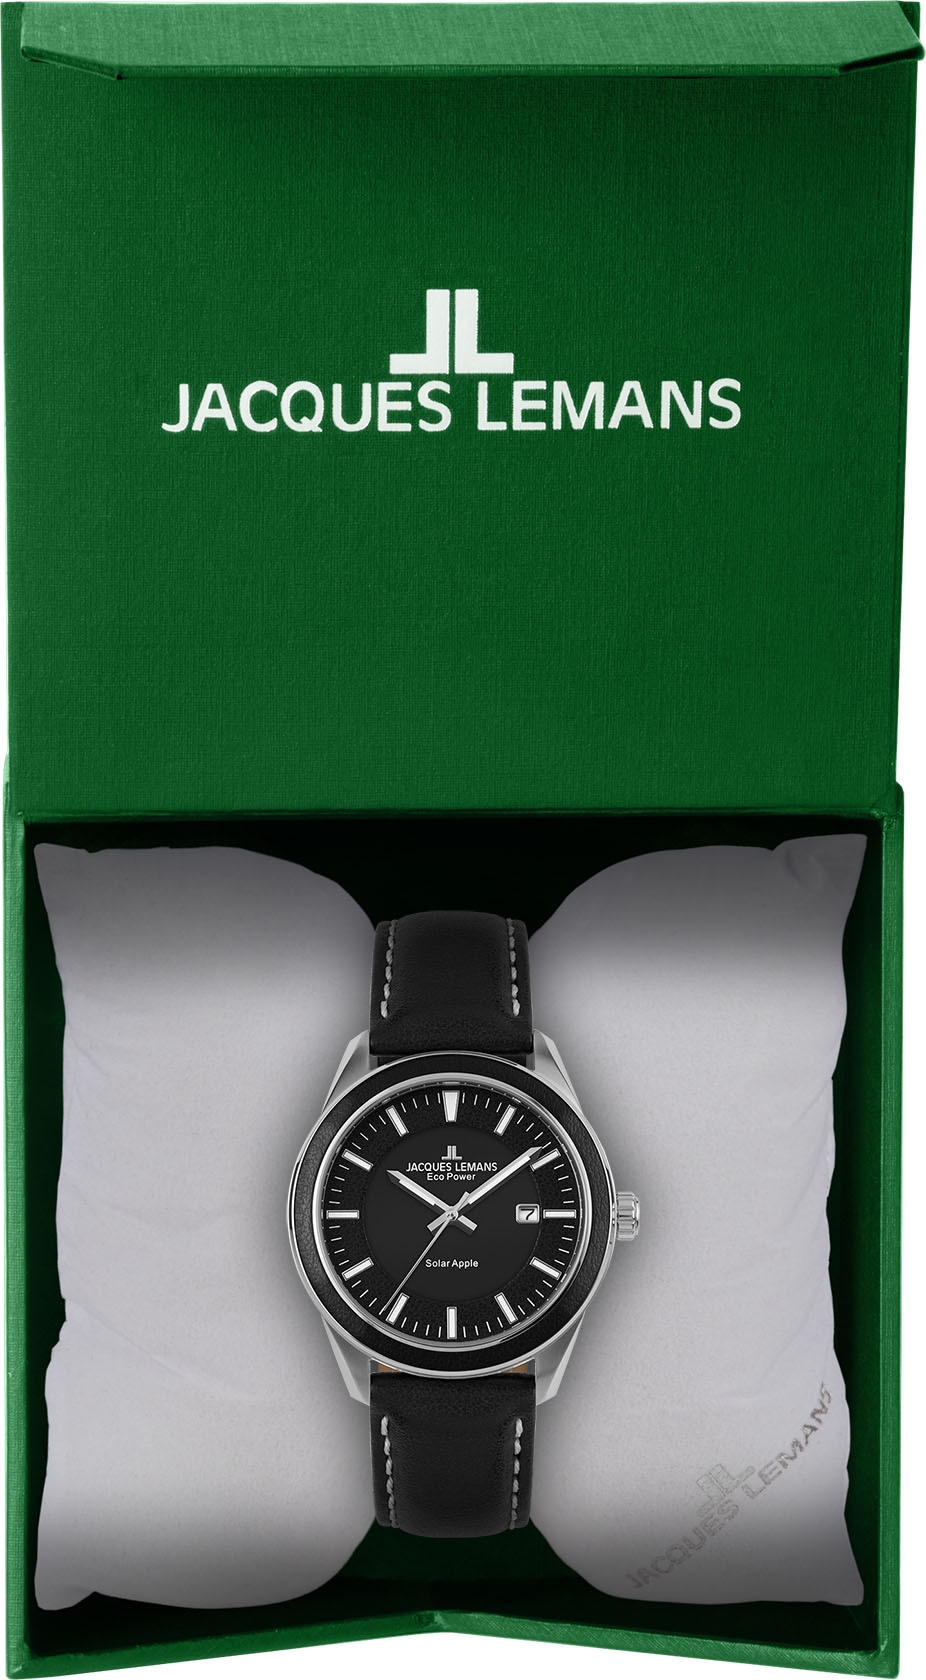 Jacques Lemans Solaruhr »Eco Power Solar Apple, 1-2116A«, Armbanduhr, Herrenuhr, Datum, Leuchtzeigergehärtetes Crystexglas